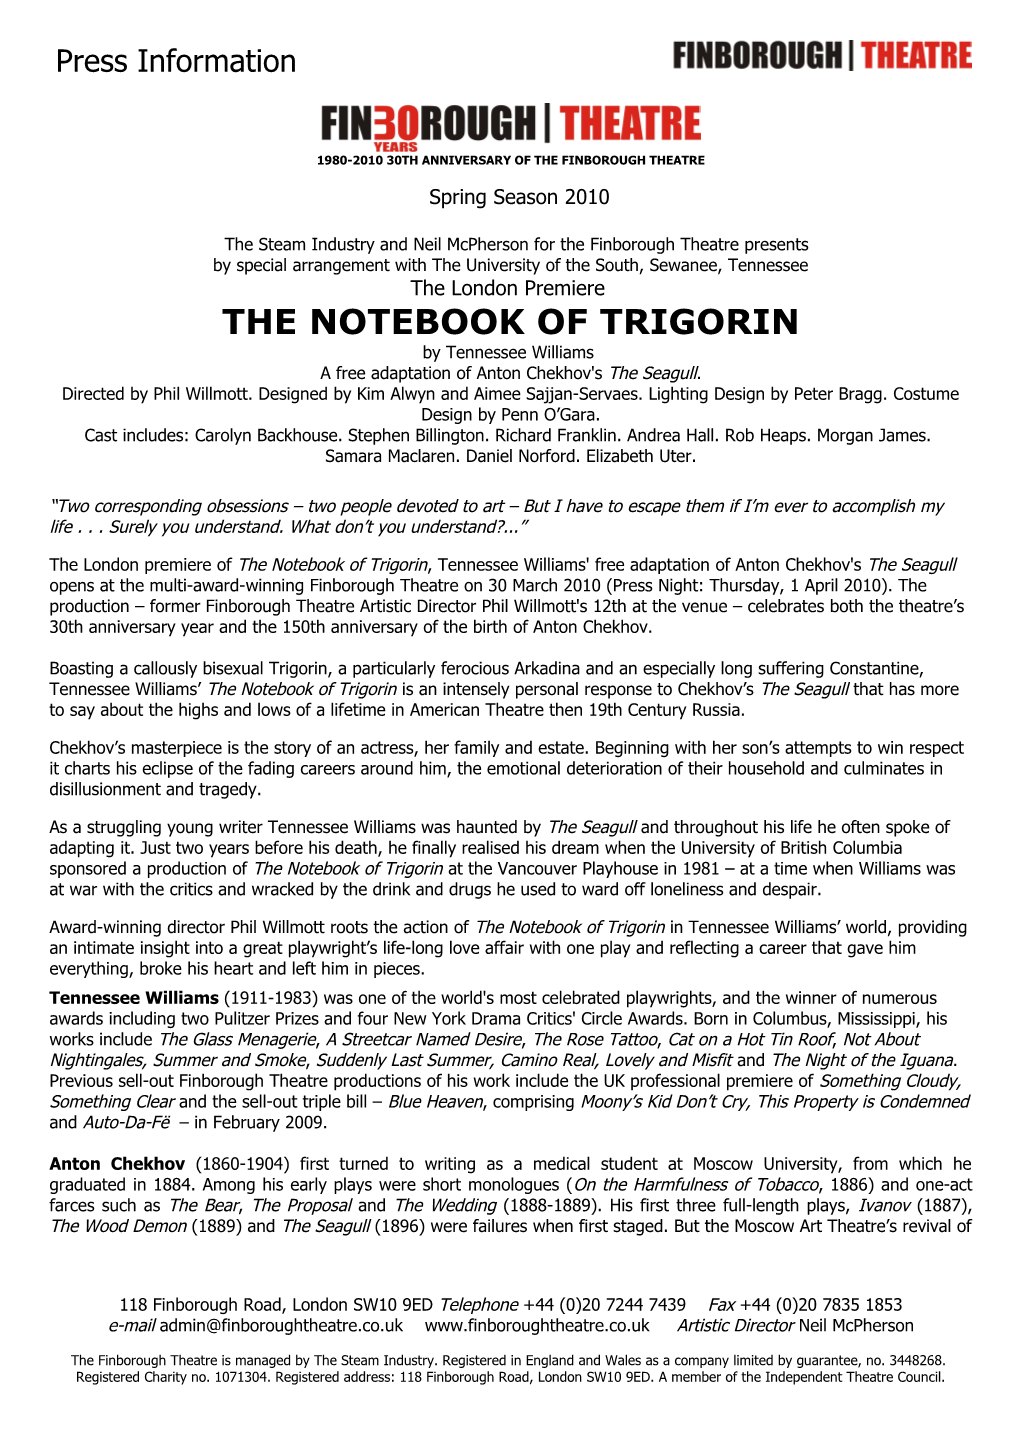 Press the Notebook of Trigorin